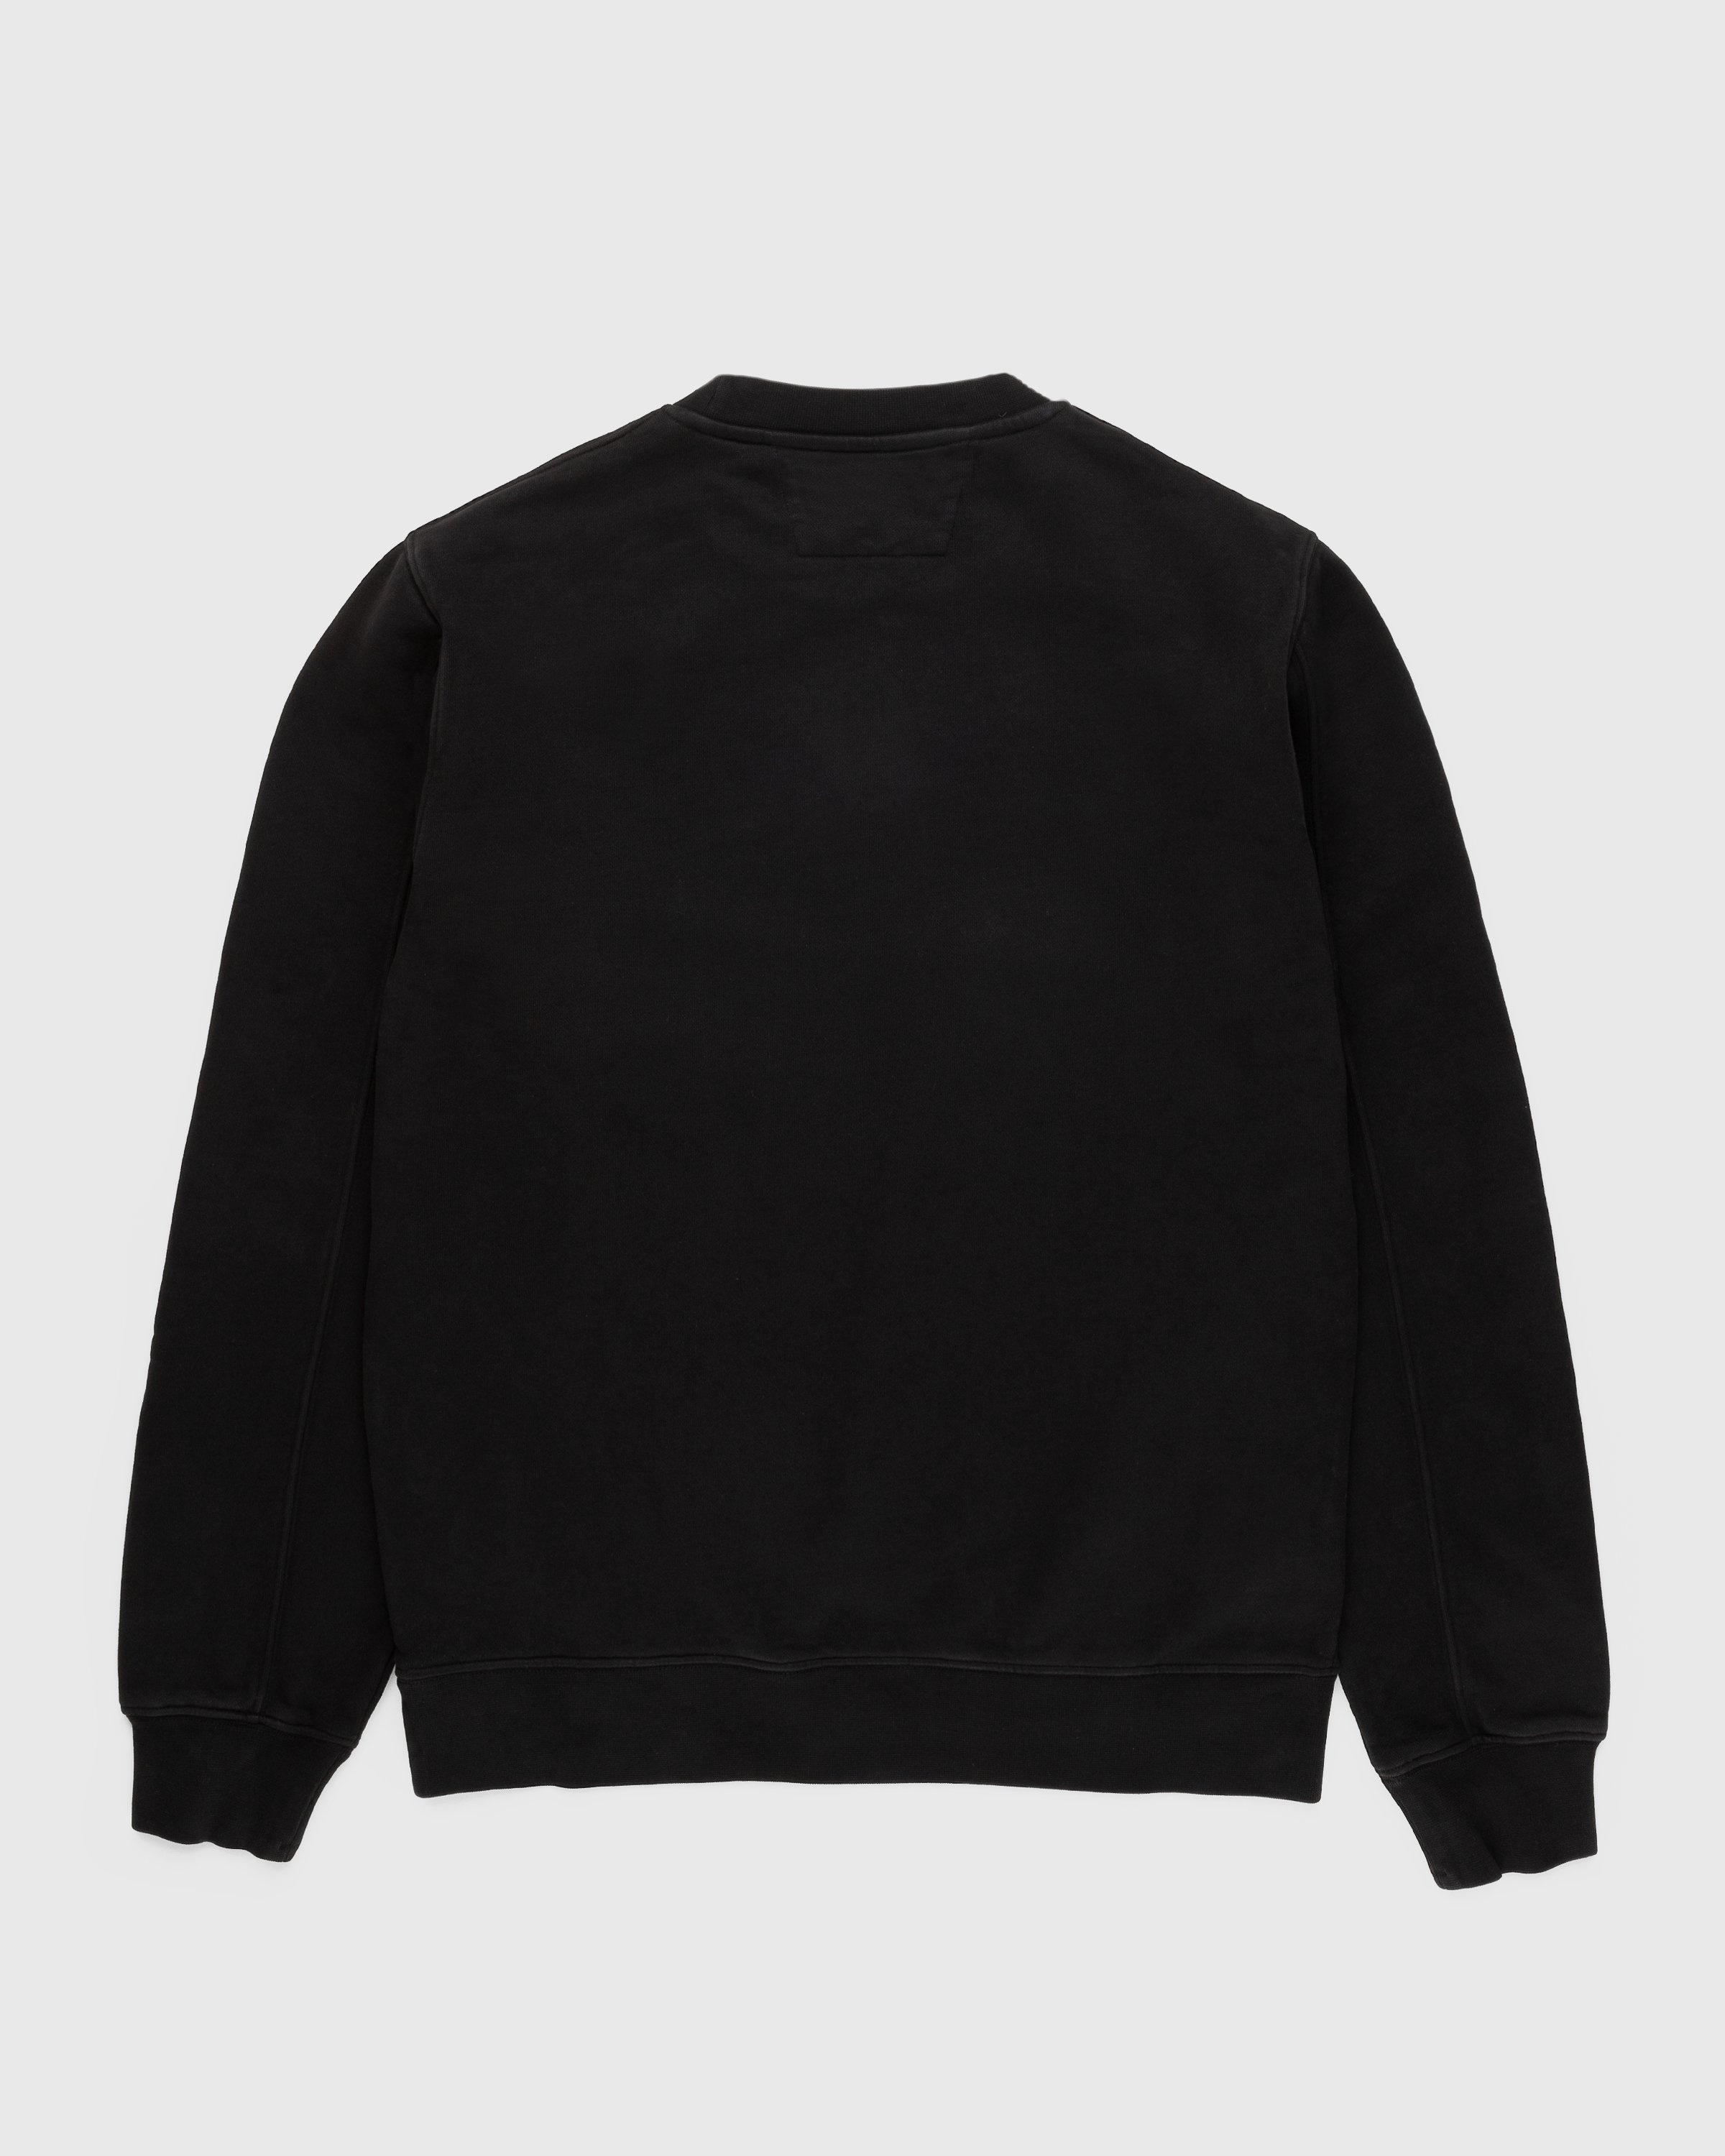 C.P. Company – Diagonal Raised Fleece Crewneck Sweatshirt Black - Sweats - Black - Image 2